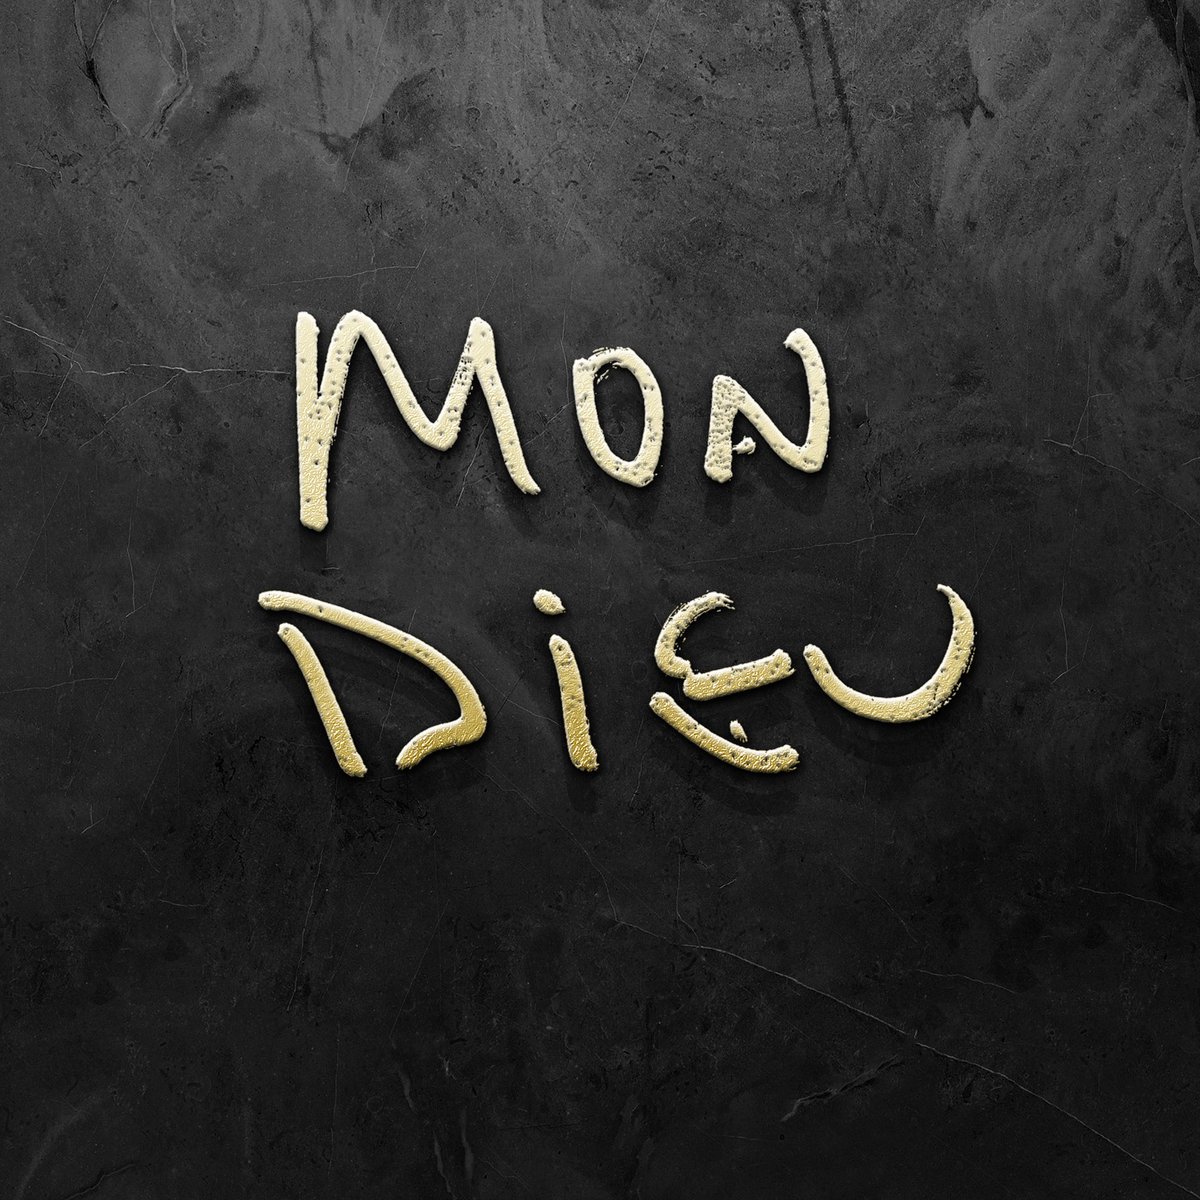 New Song. Mon Dieu. youtu.be/XJKczru3ris